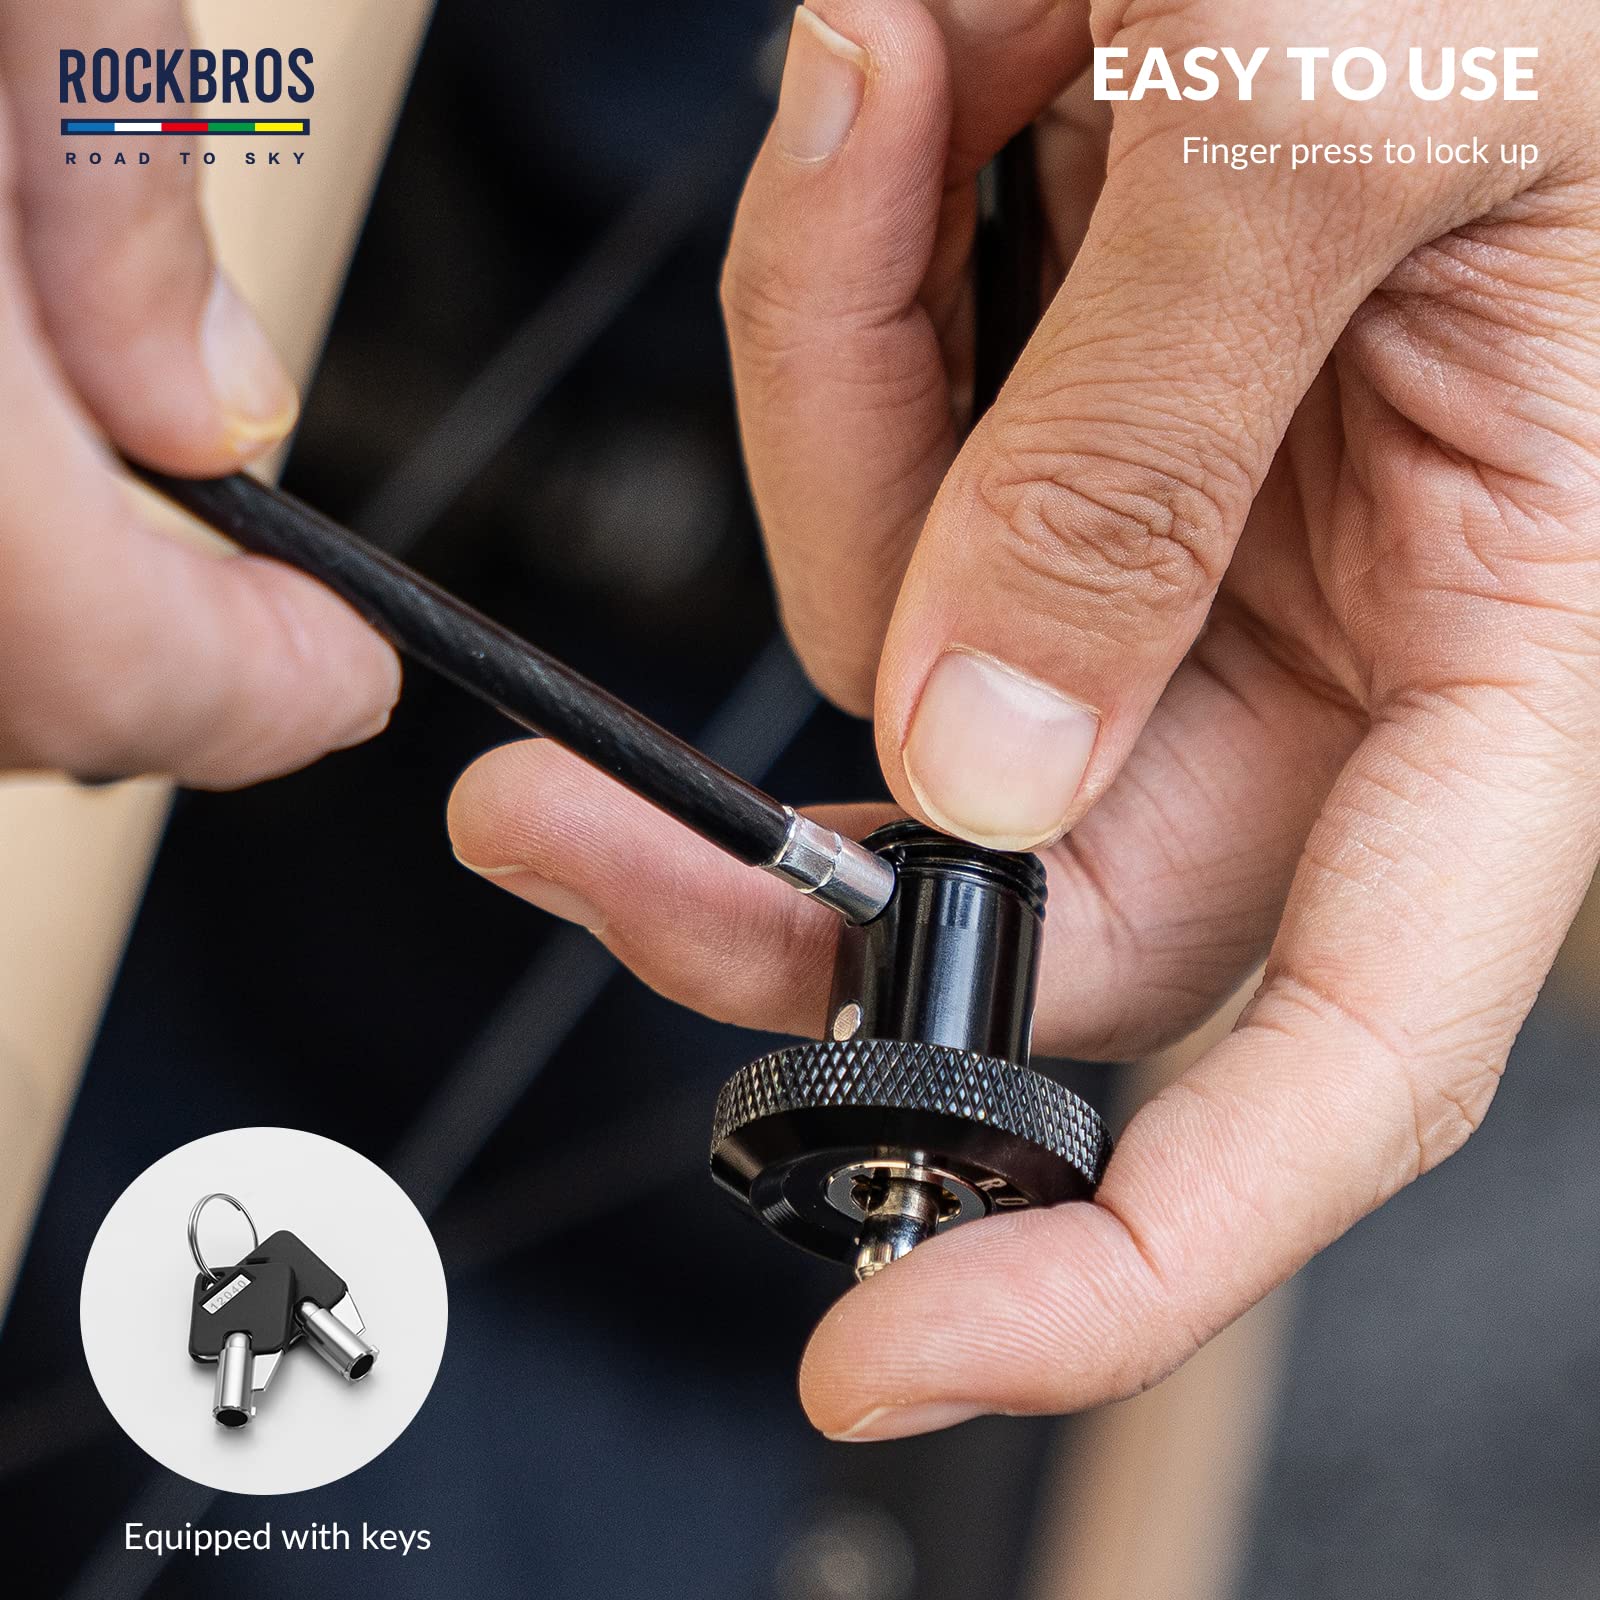 ROCKBROS Road-to-Sky Bicycle Cable Lock Mini Multifunctional Hidden 65cm